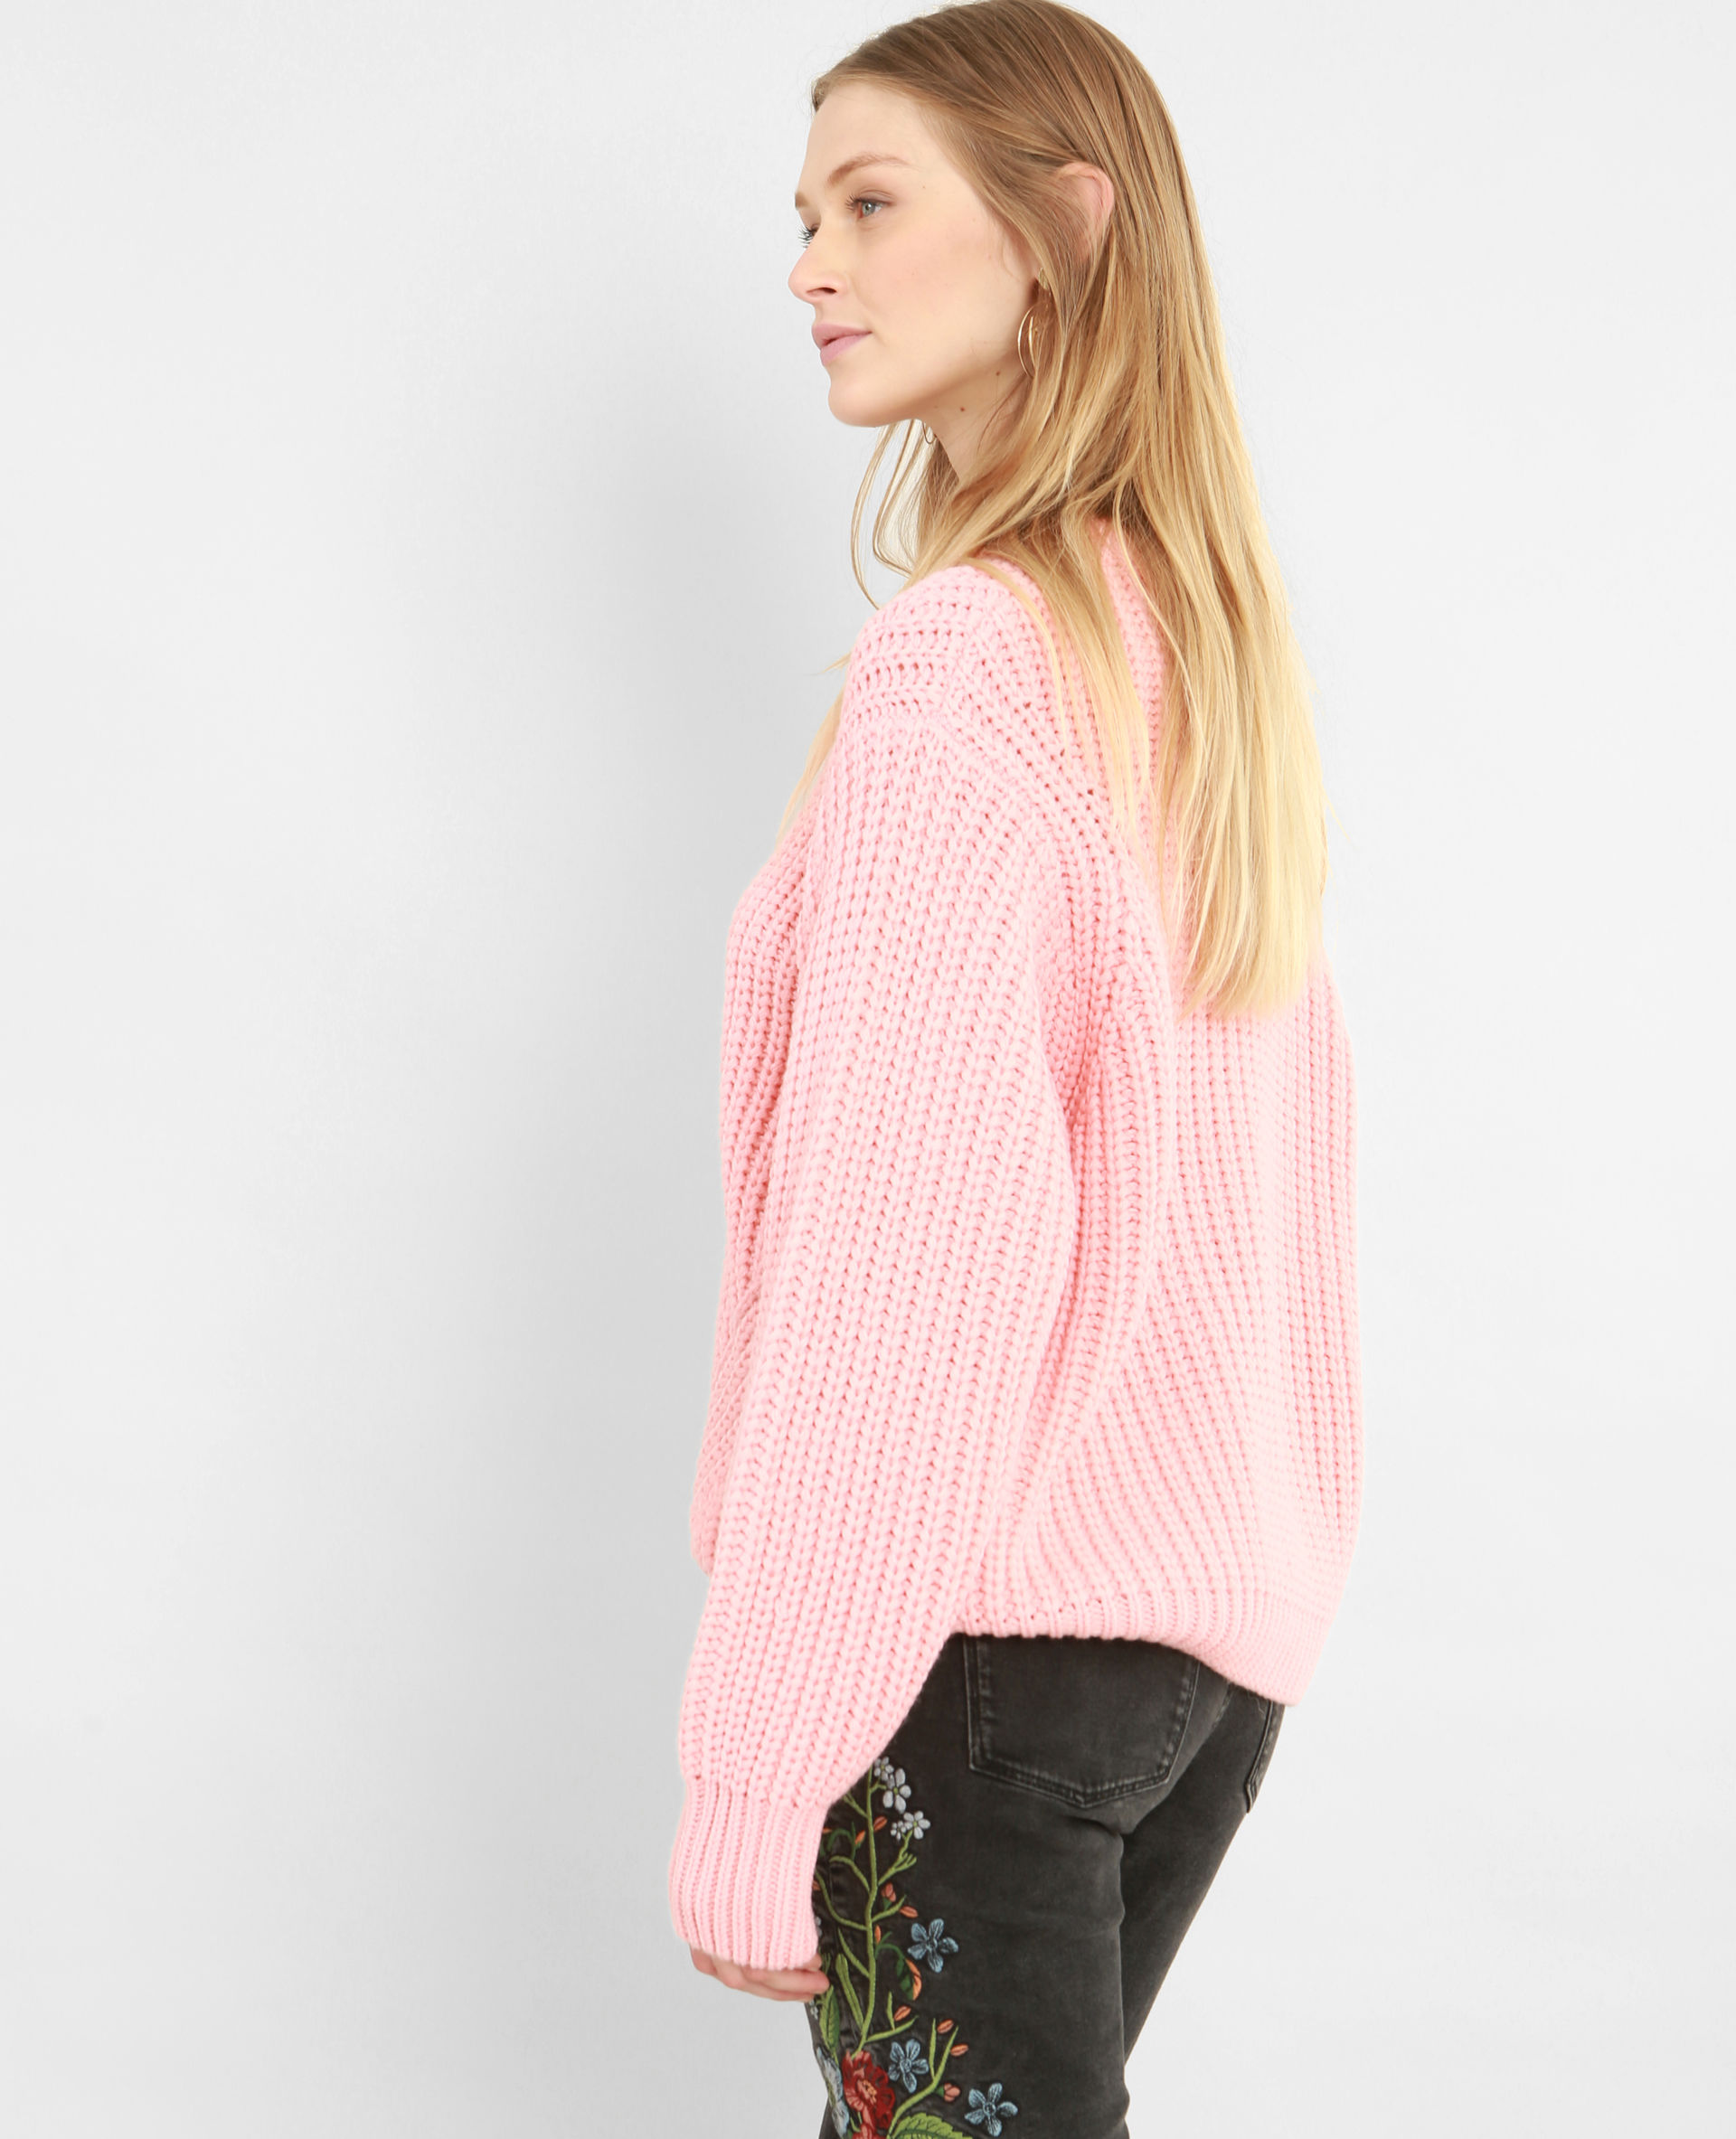 Chunky Knit Sweater – Das
Design hier zu bleiben